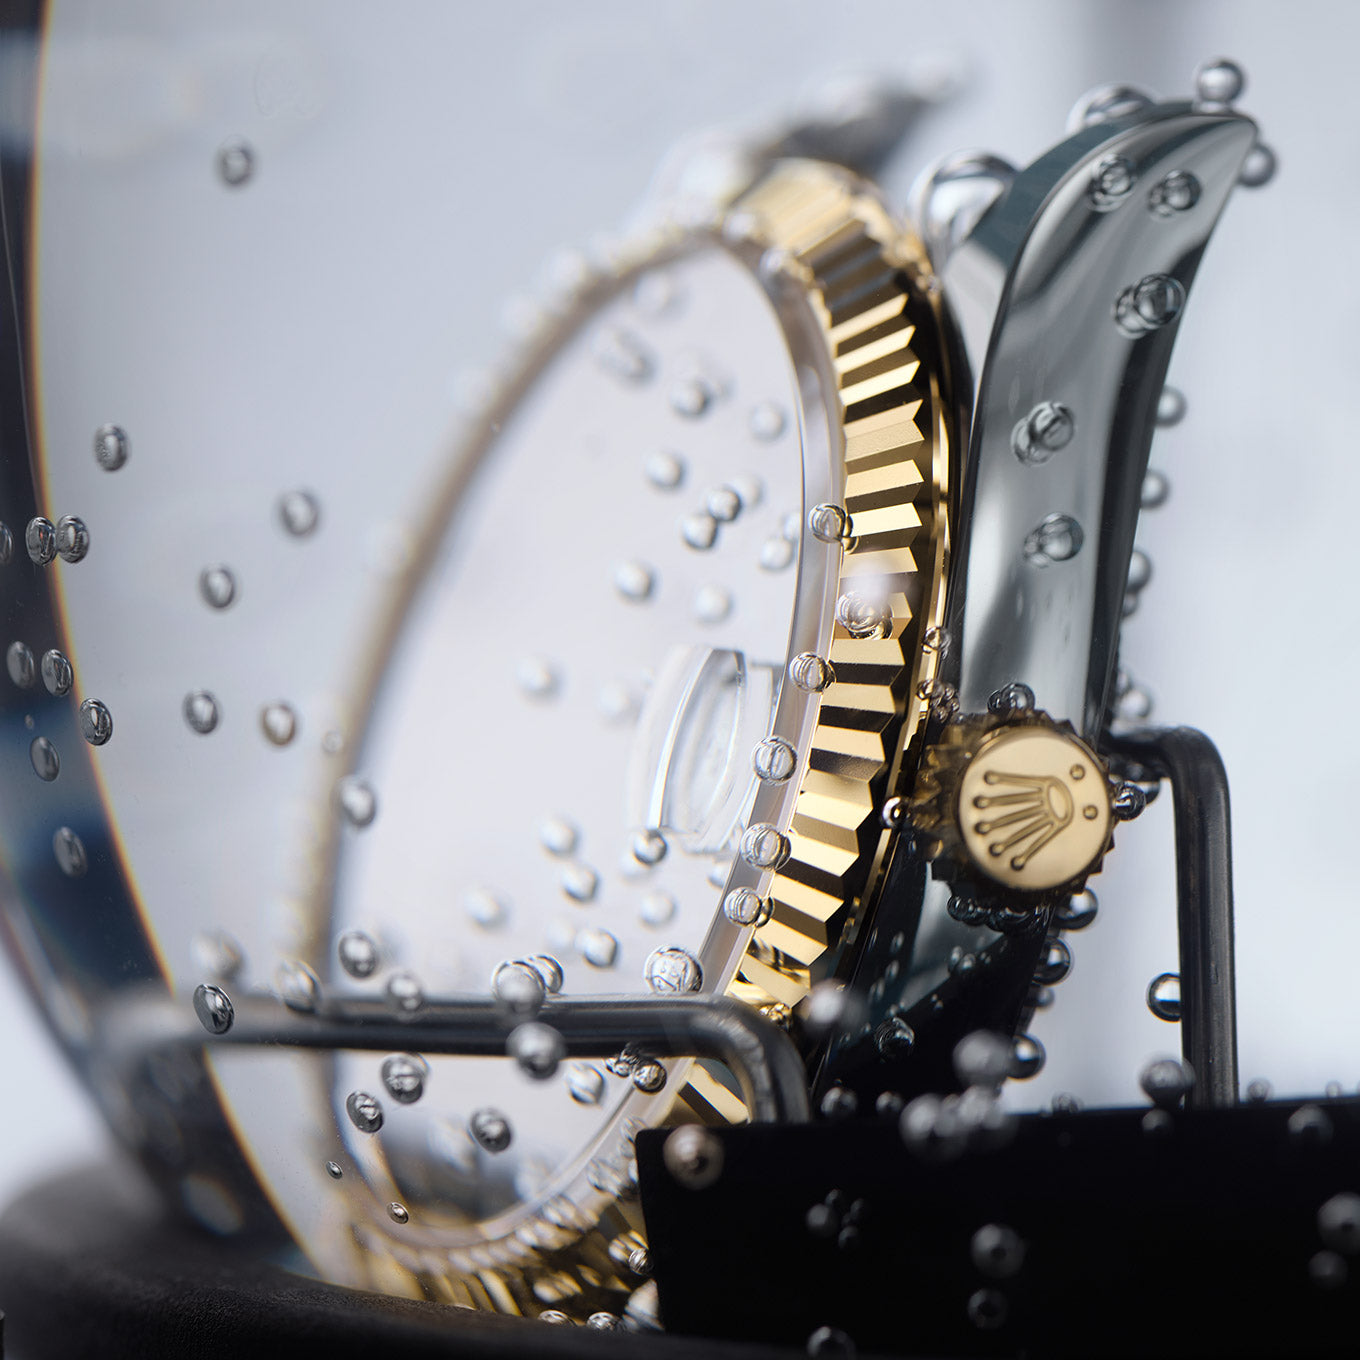 Washing Rolex watch components